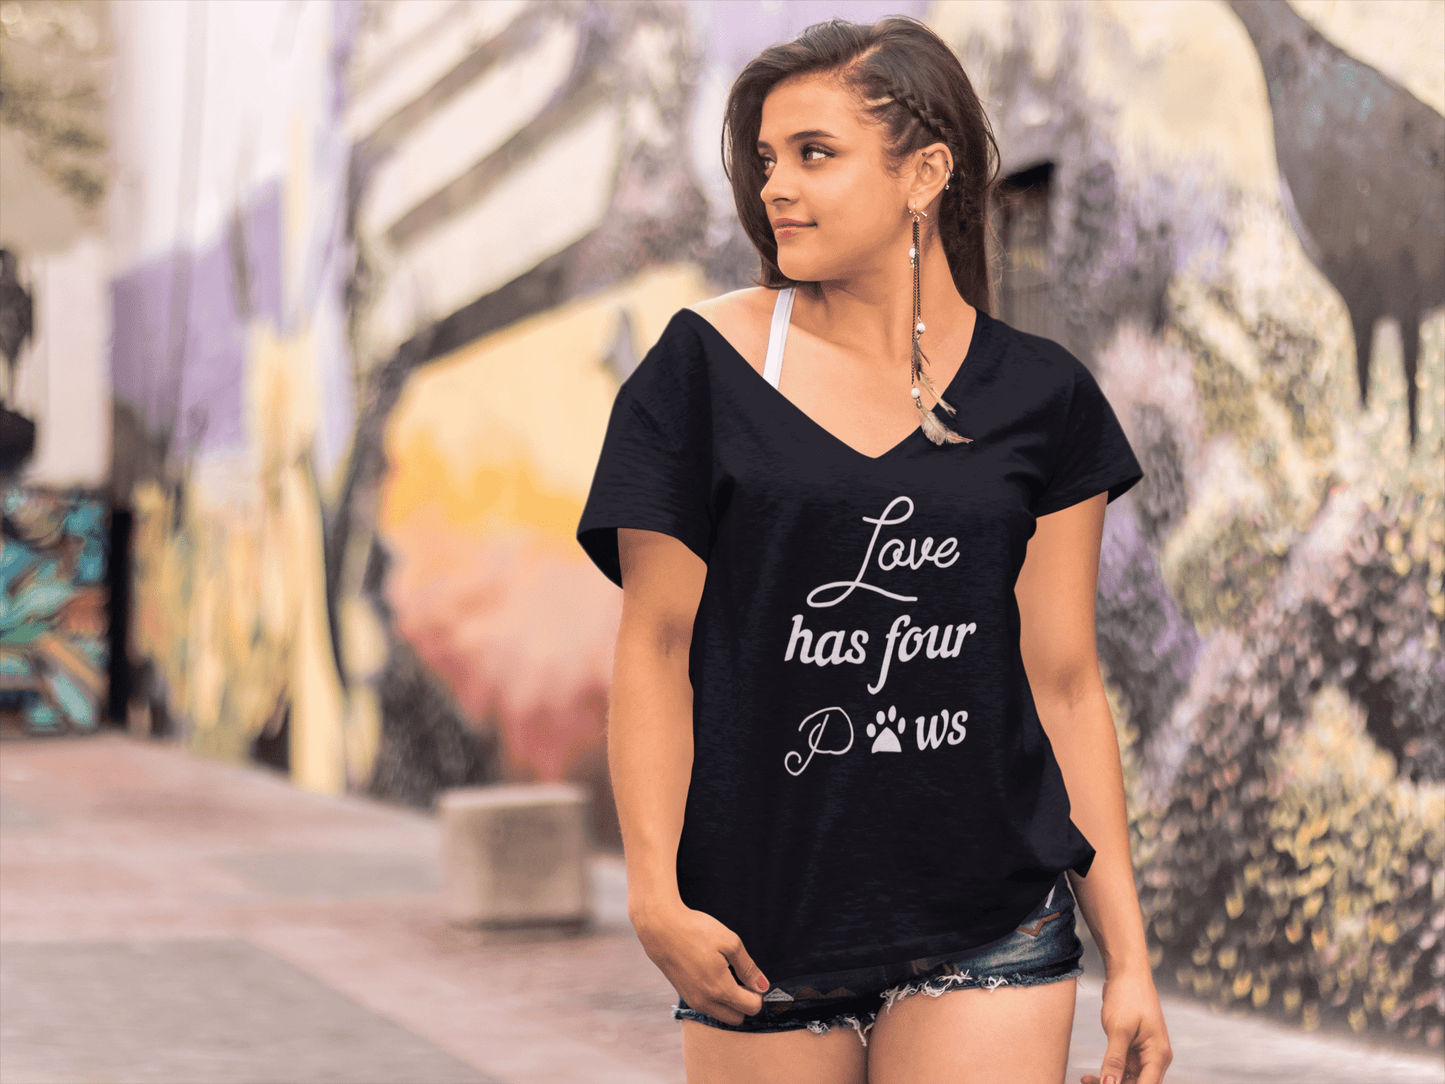 ULTRABASIC Women's T-Shirt Love Has Four Paws - Dog Short Sleeve Tee Shirt Tops